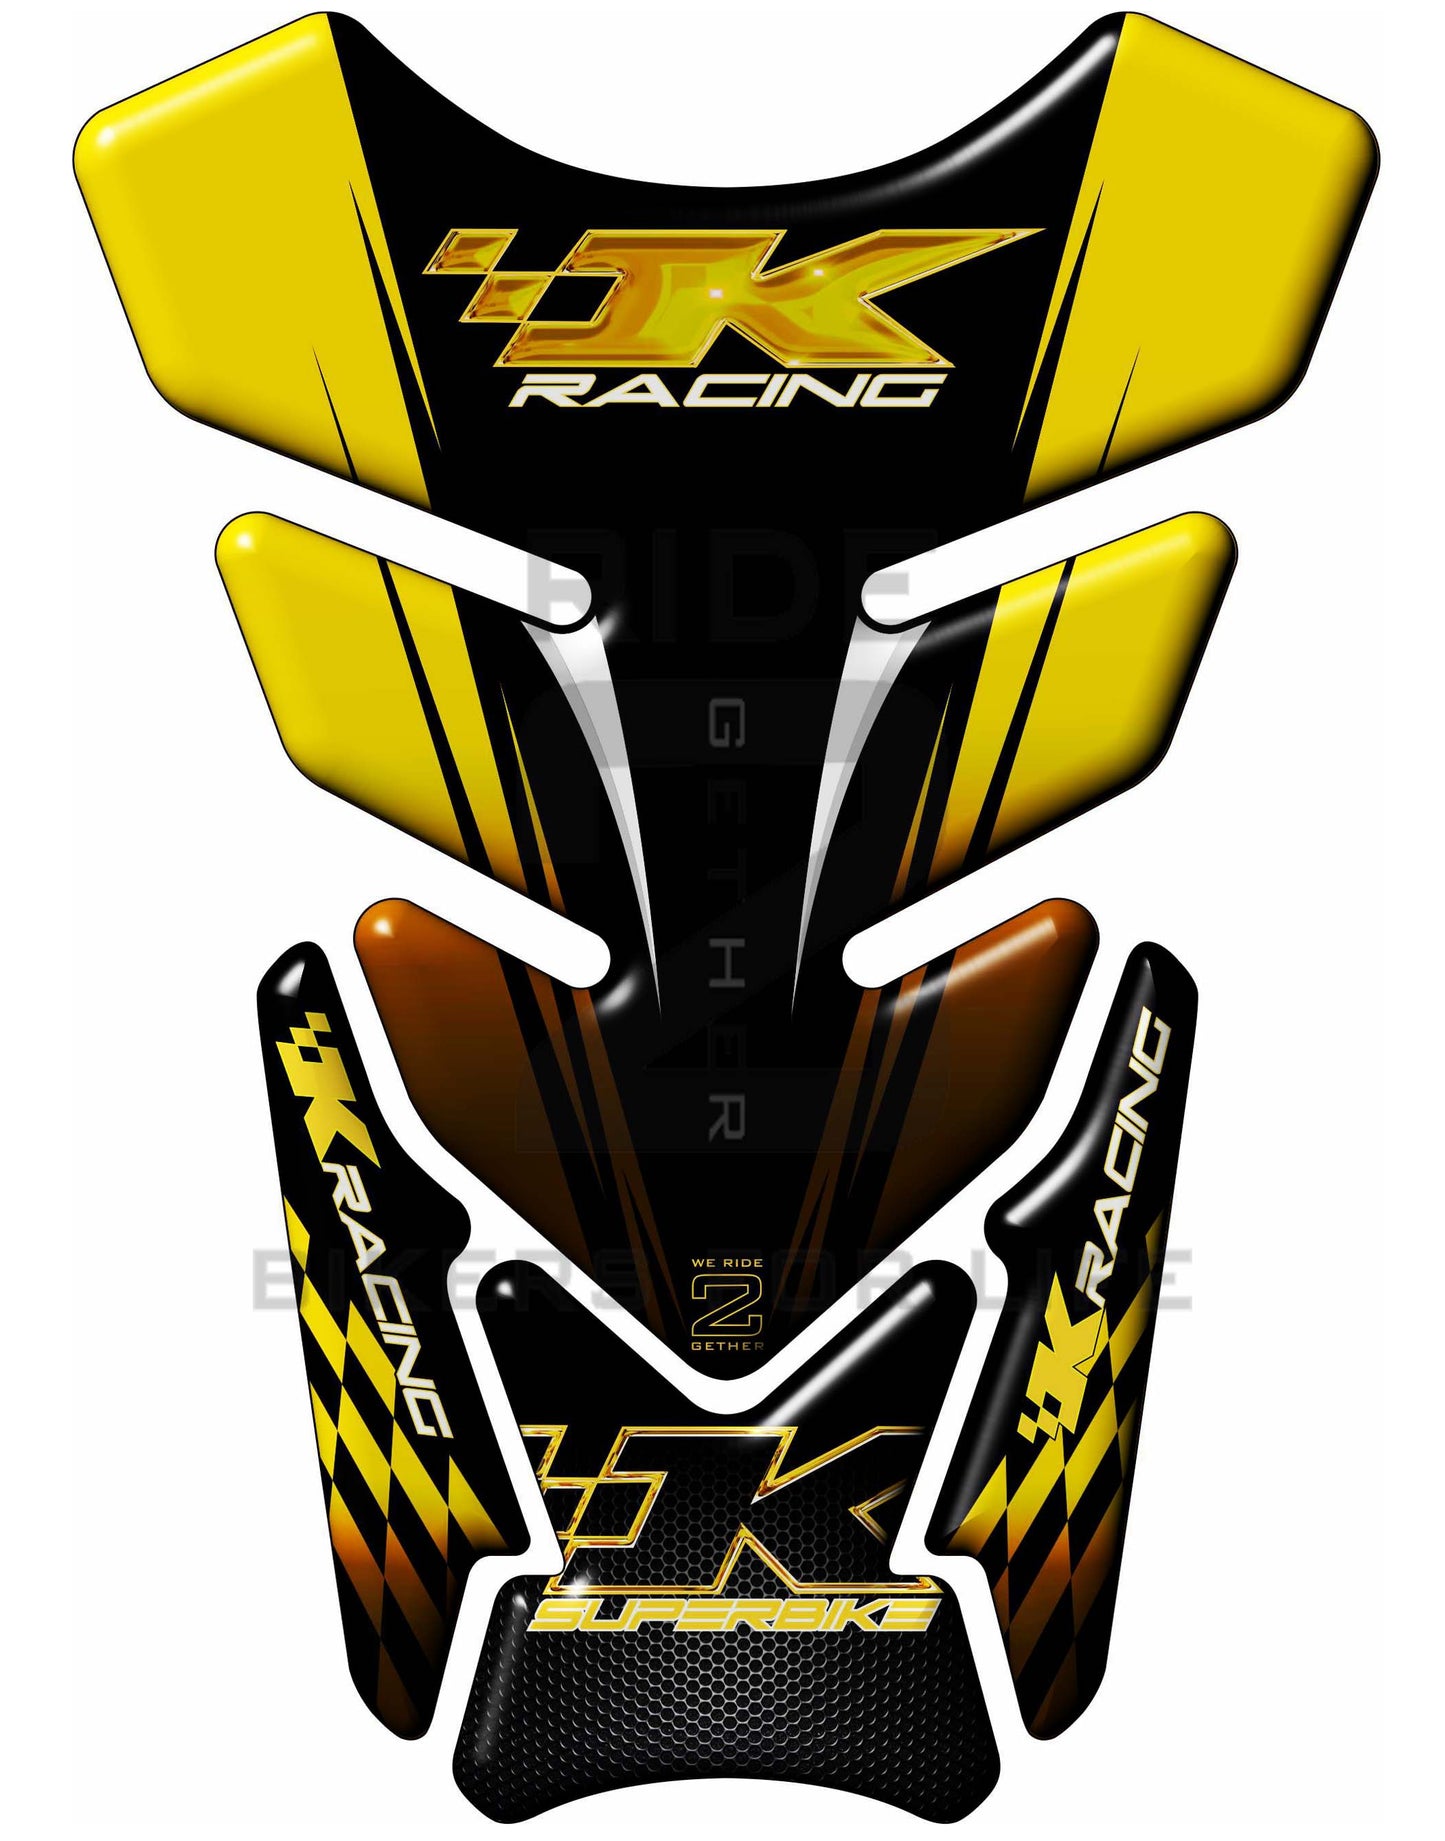 Kawasaki K Racing Yellow and Black Carbon Fibre  SuperBike Tank Pad / Protector